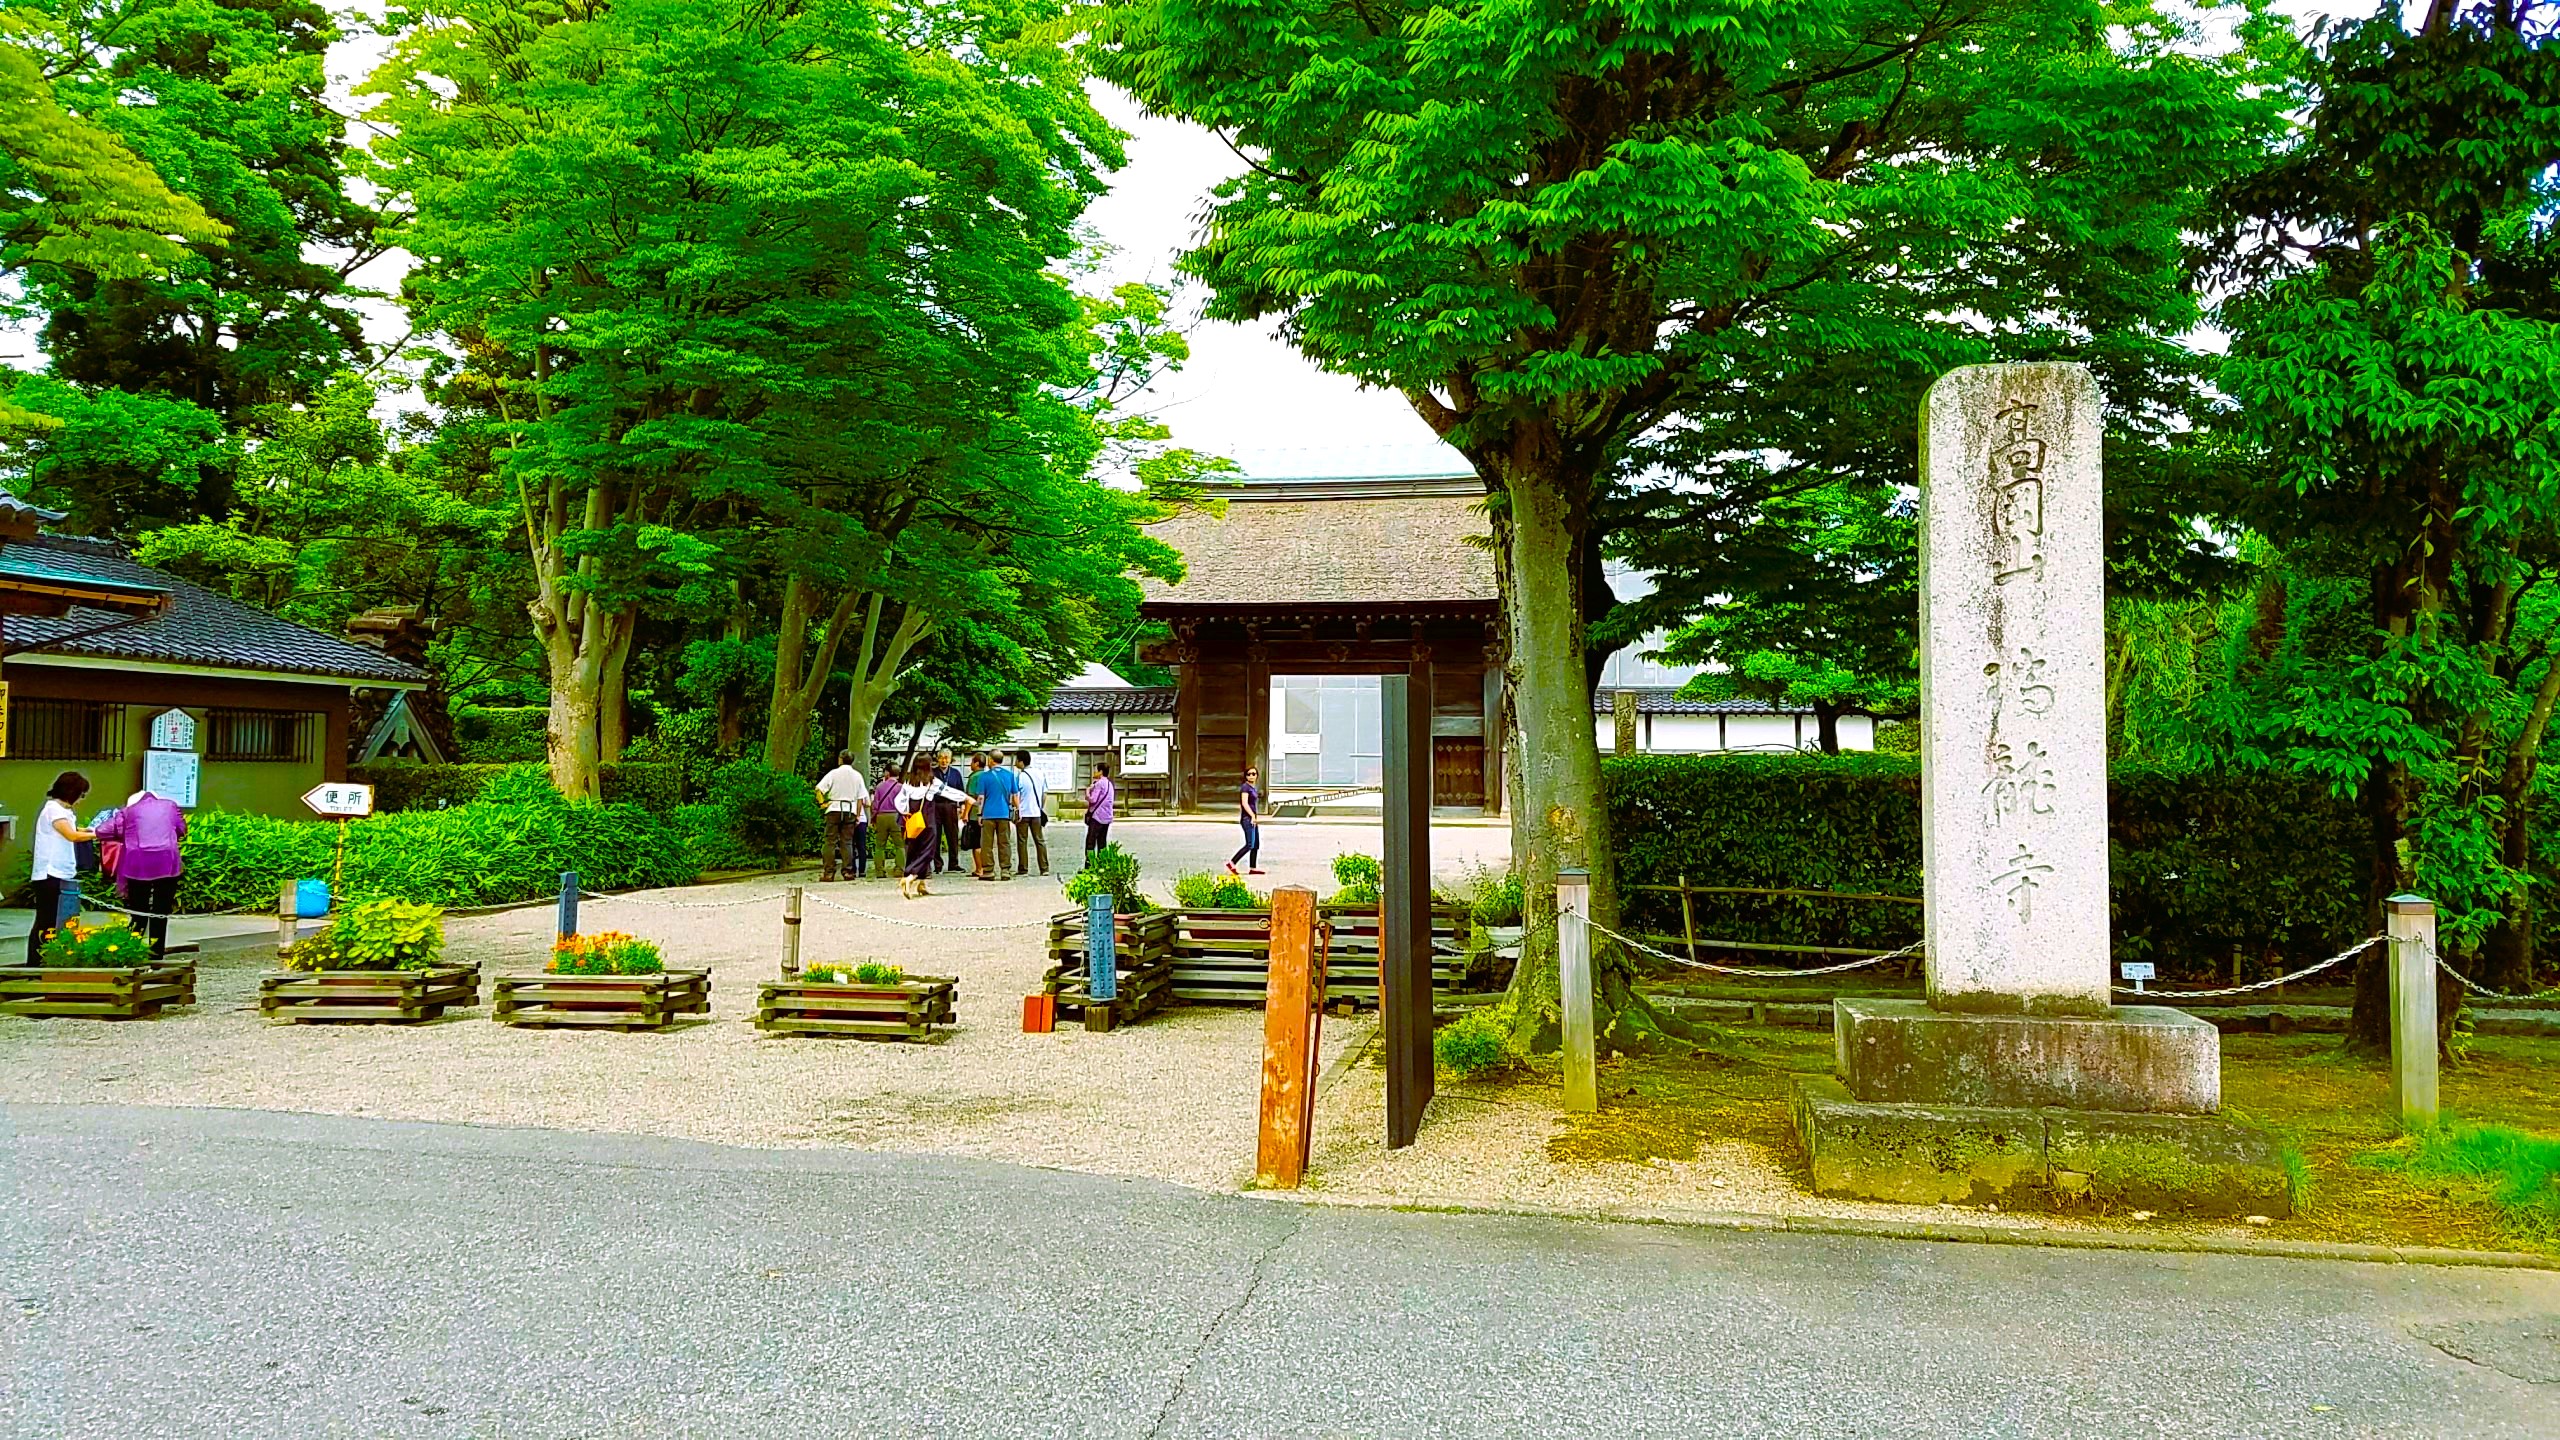 Toyama Tourist Spots! 6 things to do!